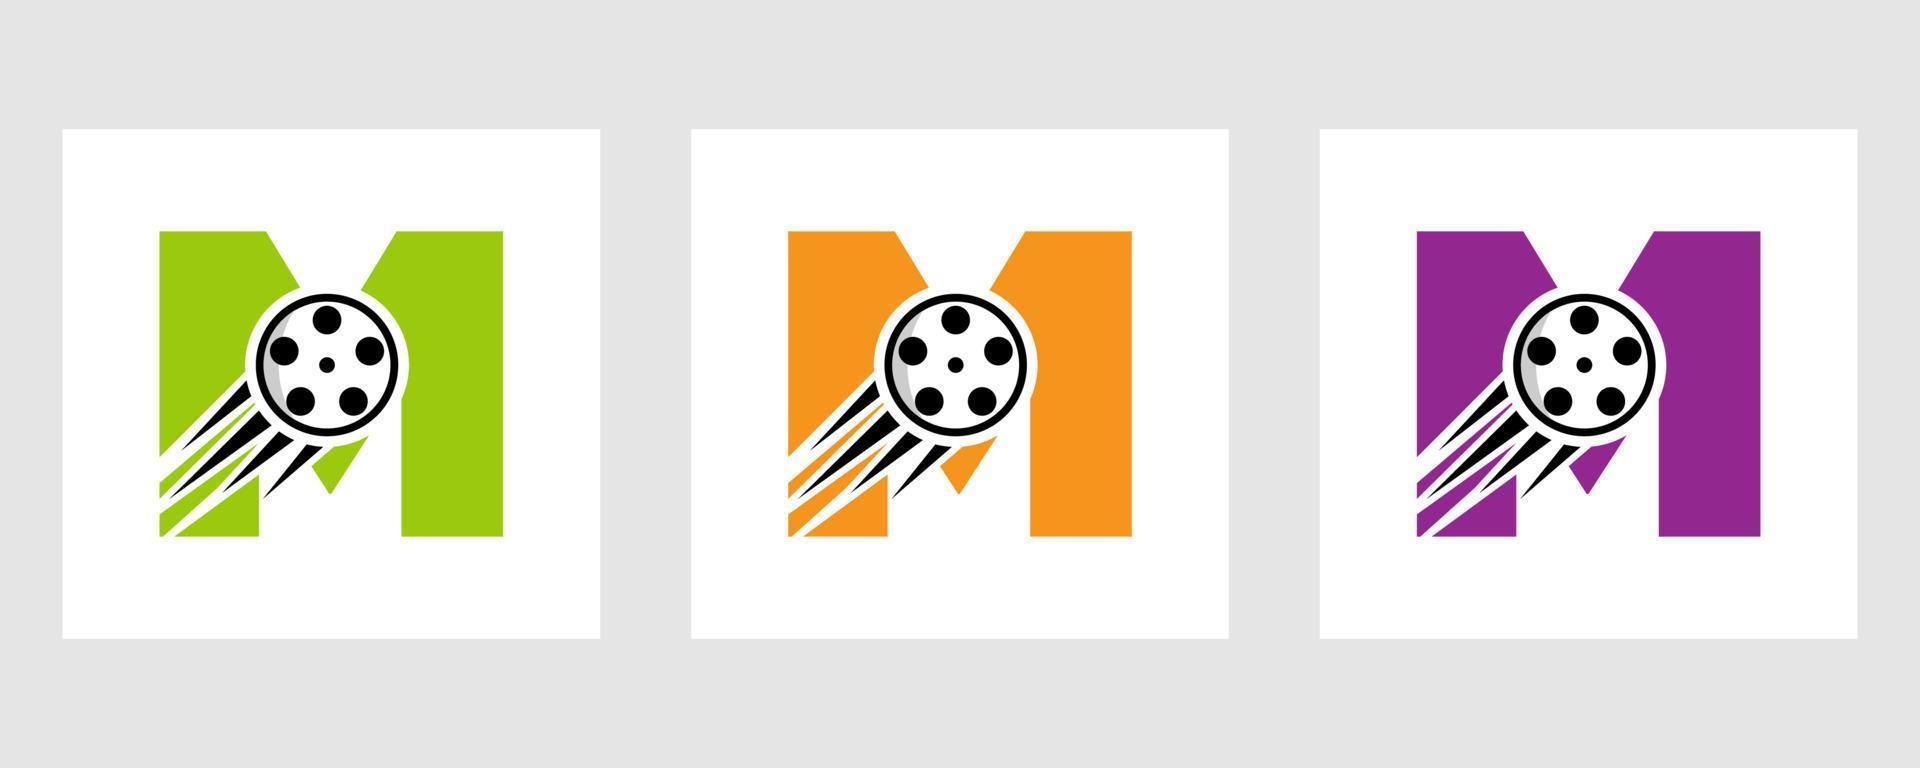 Letter M Film Logo Concept With Film Reel For Media Sign, Movie Director Symbol vector